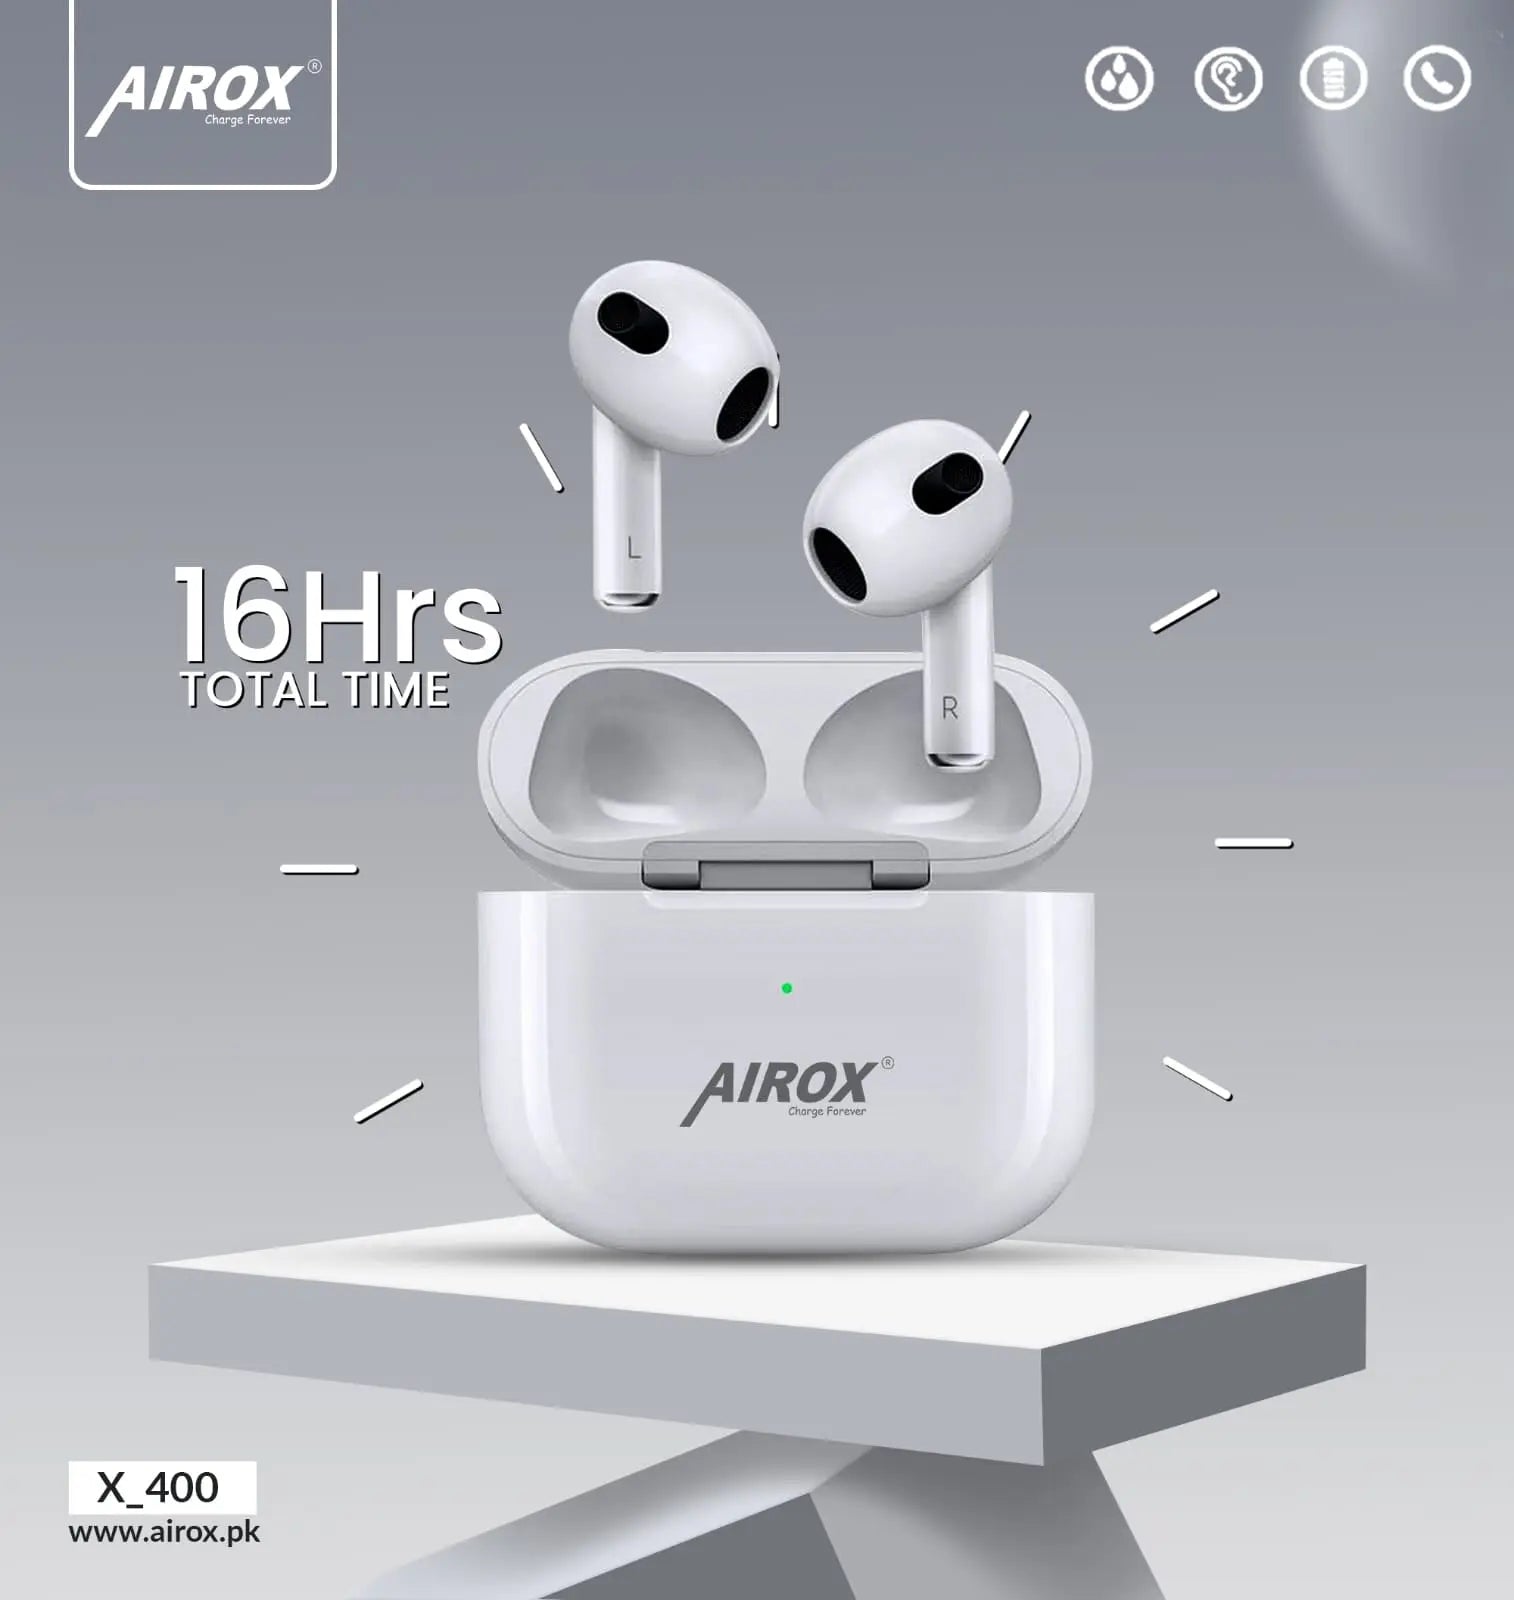 Airox x400 Airpods Pro 3rd Gen Premium Quality Wireless Earbuds - Airox.pk